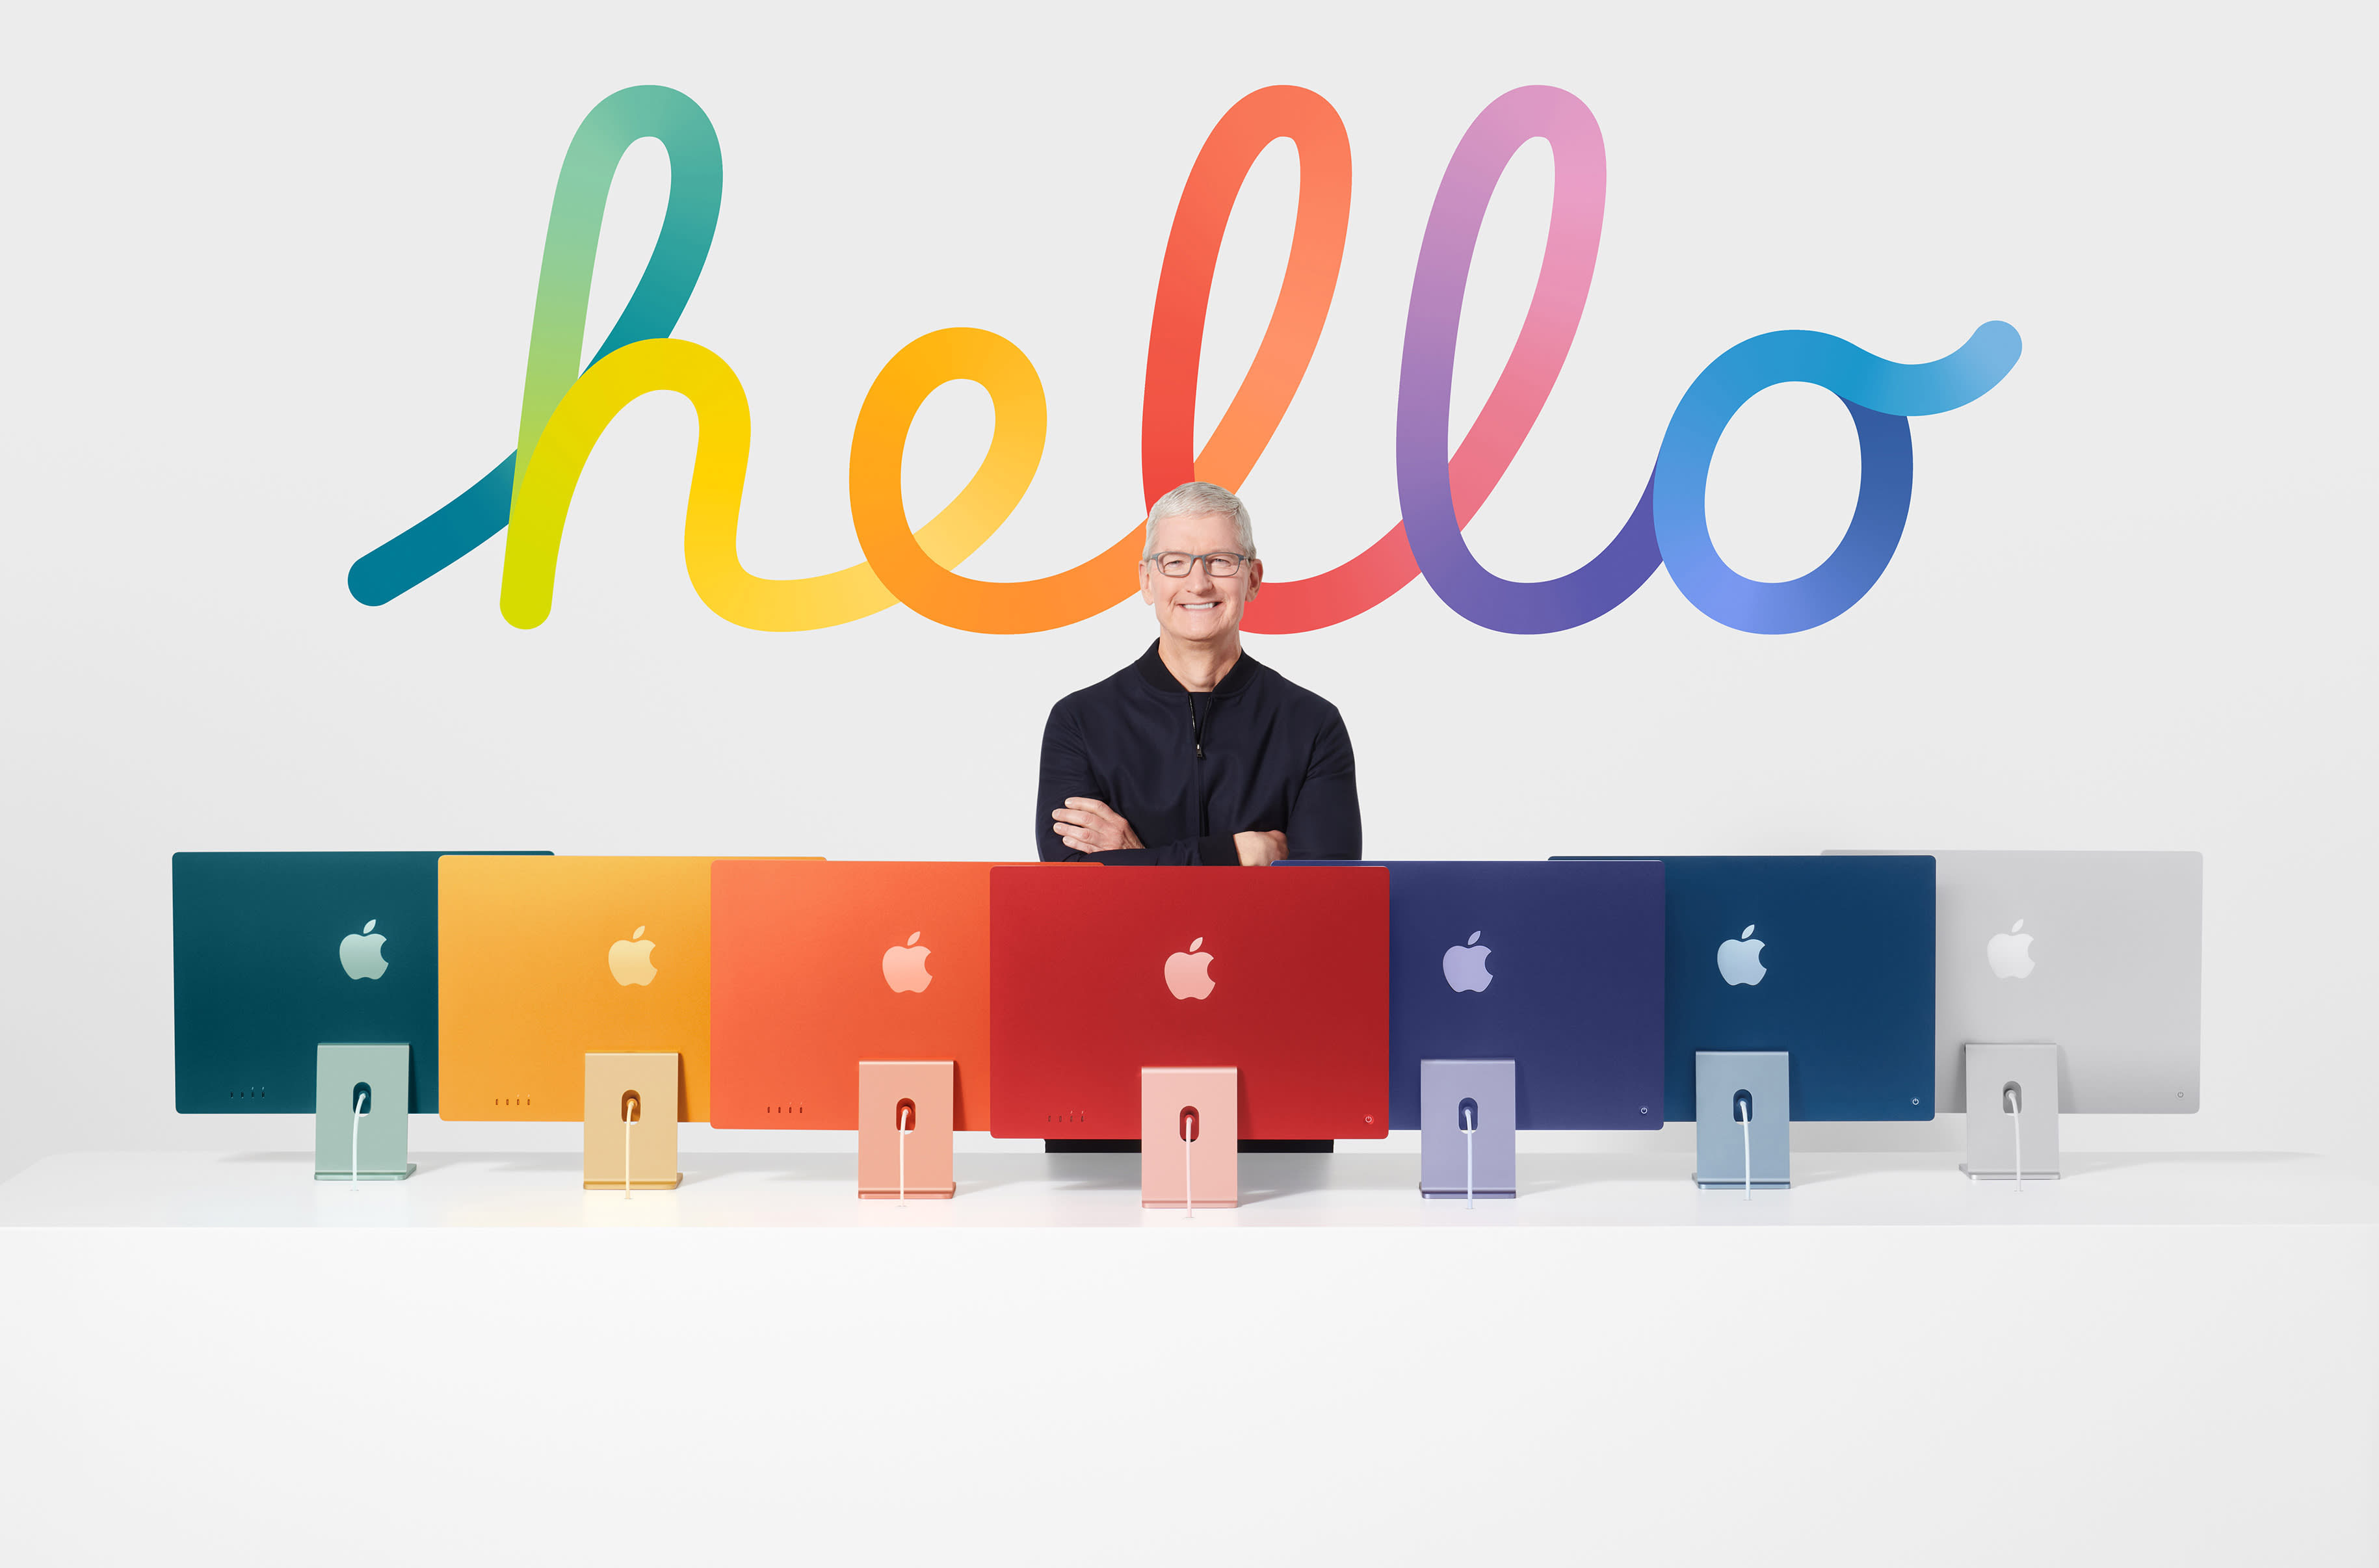 iPad Pros, new iMacs announced